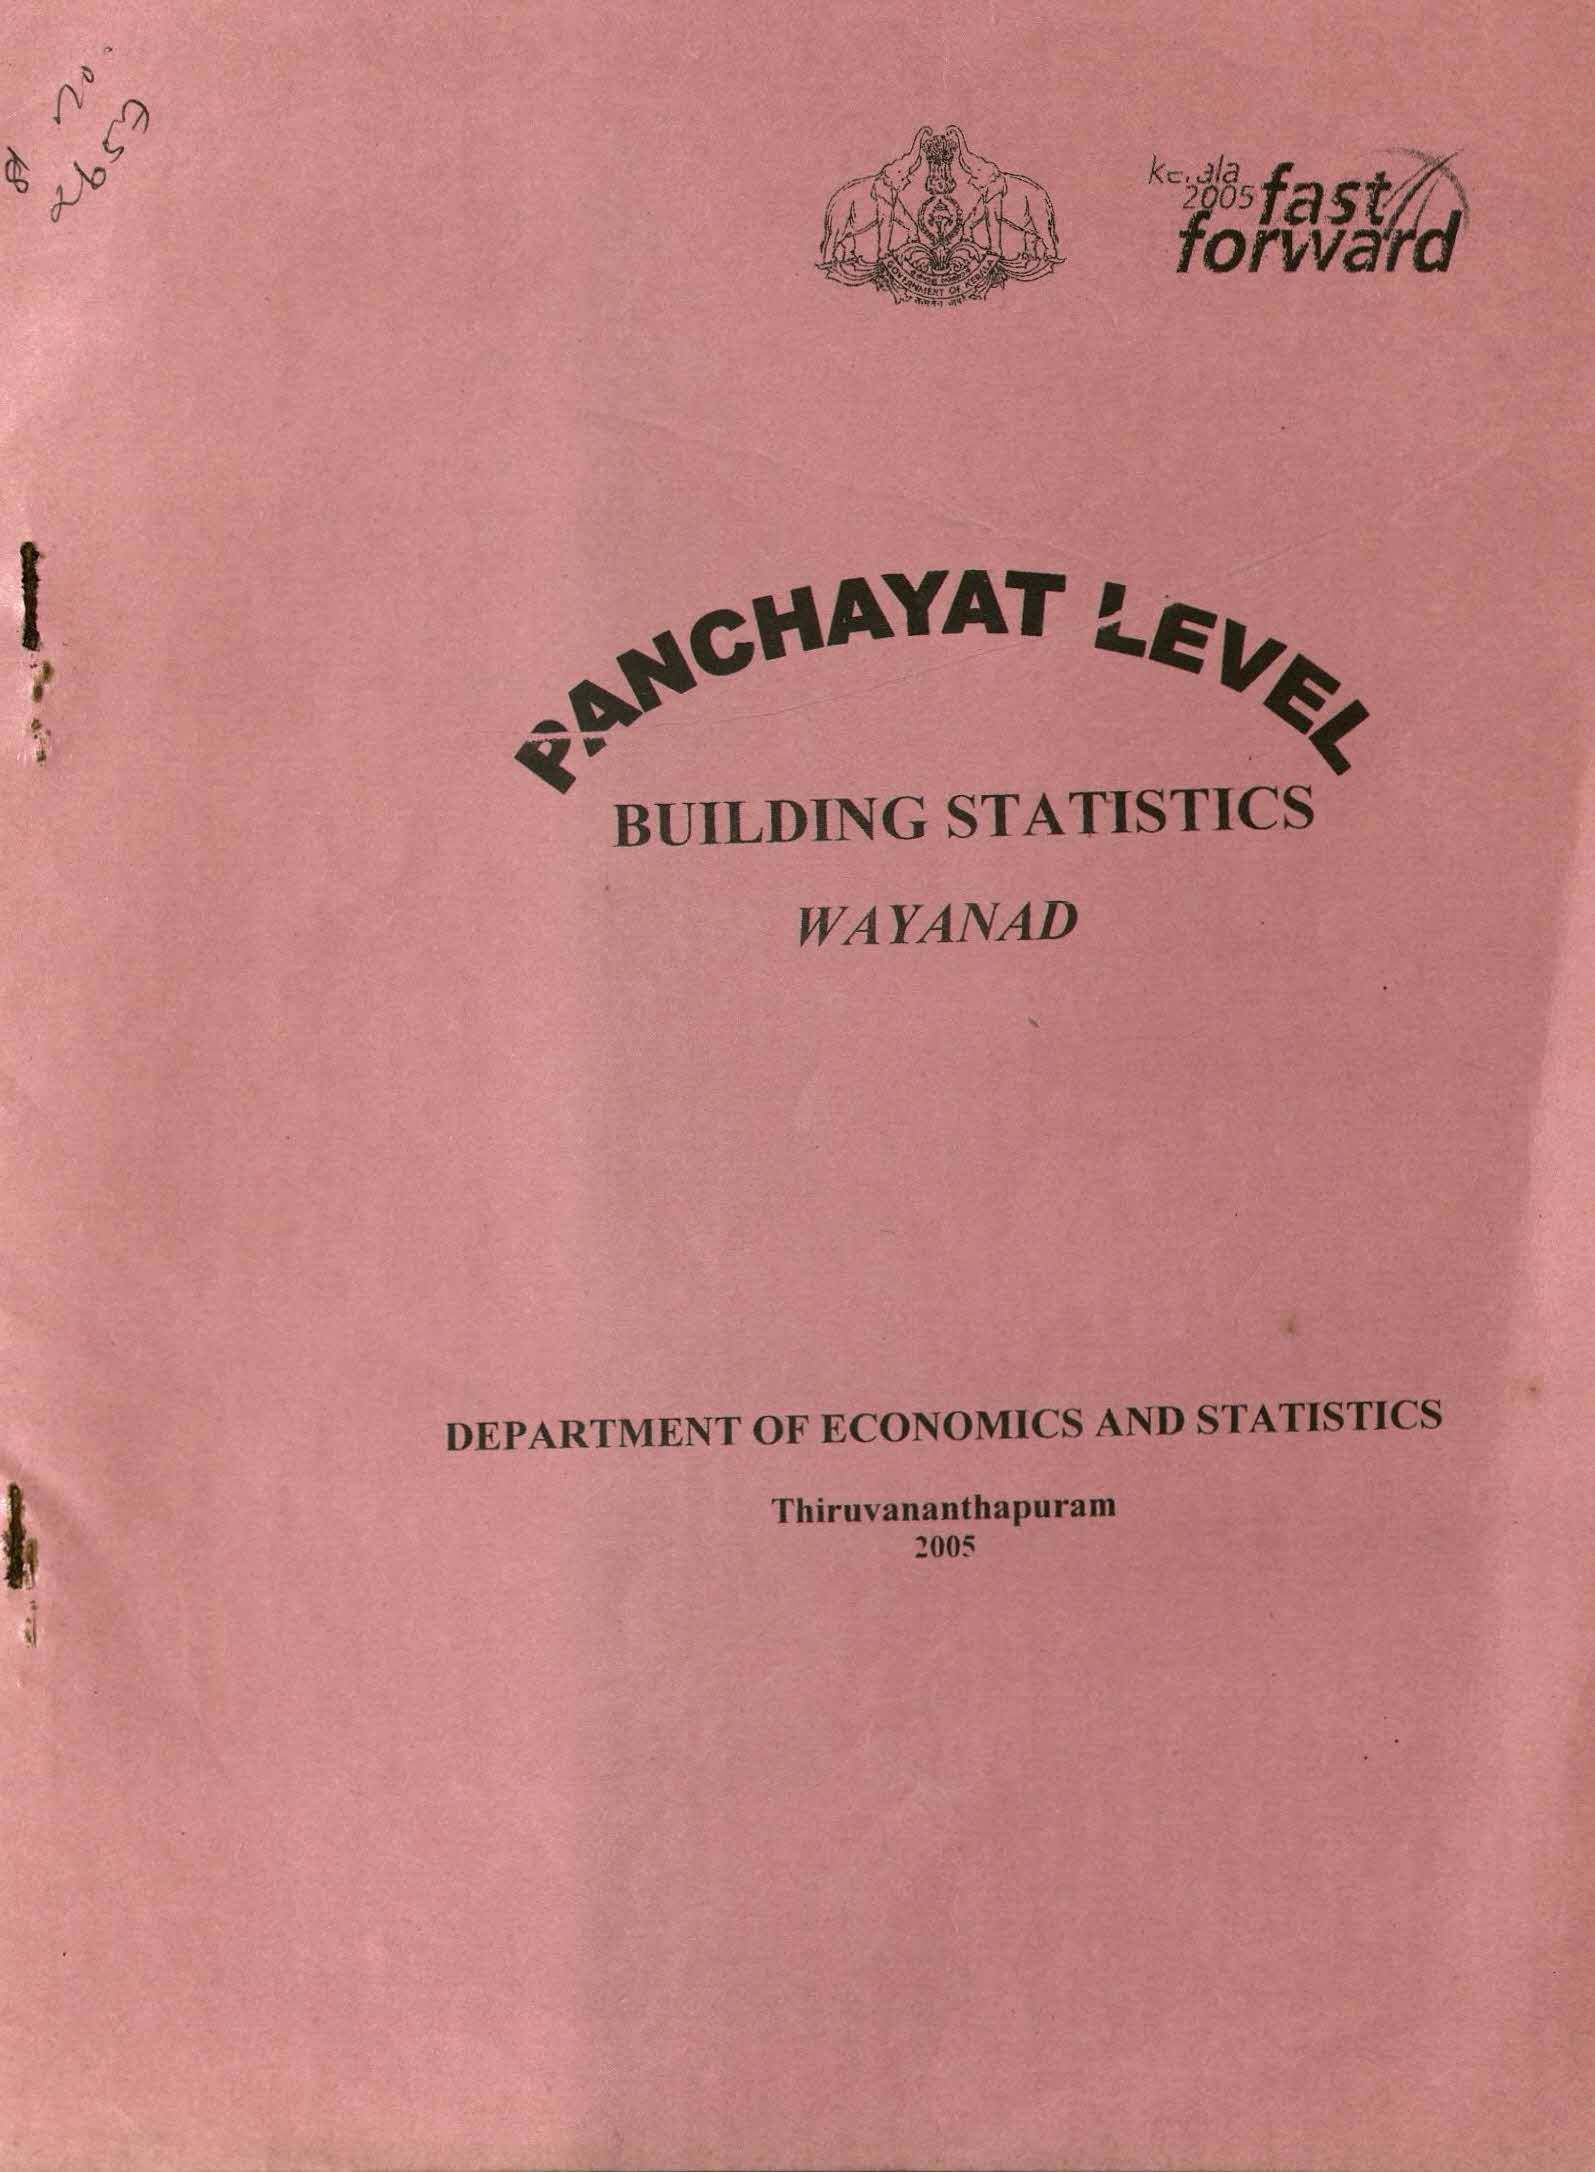 PANCHAYAT LEVEL BUILDING STATISTICS WAYANAD 2005